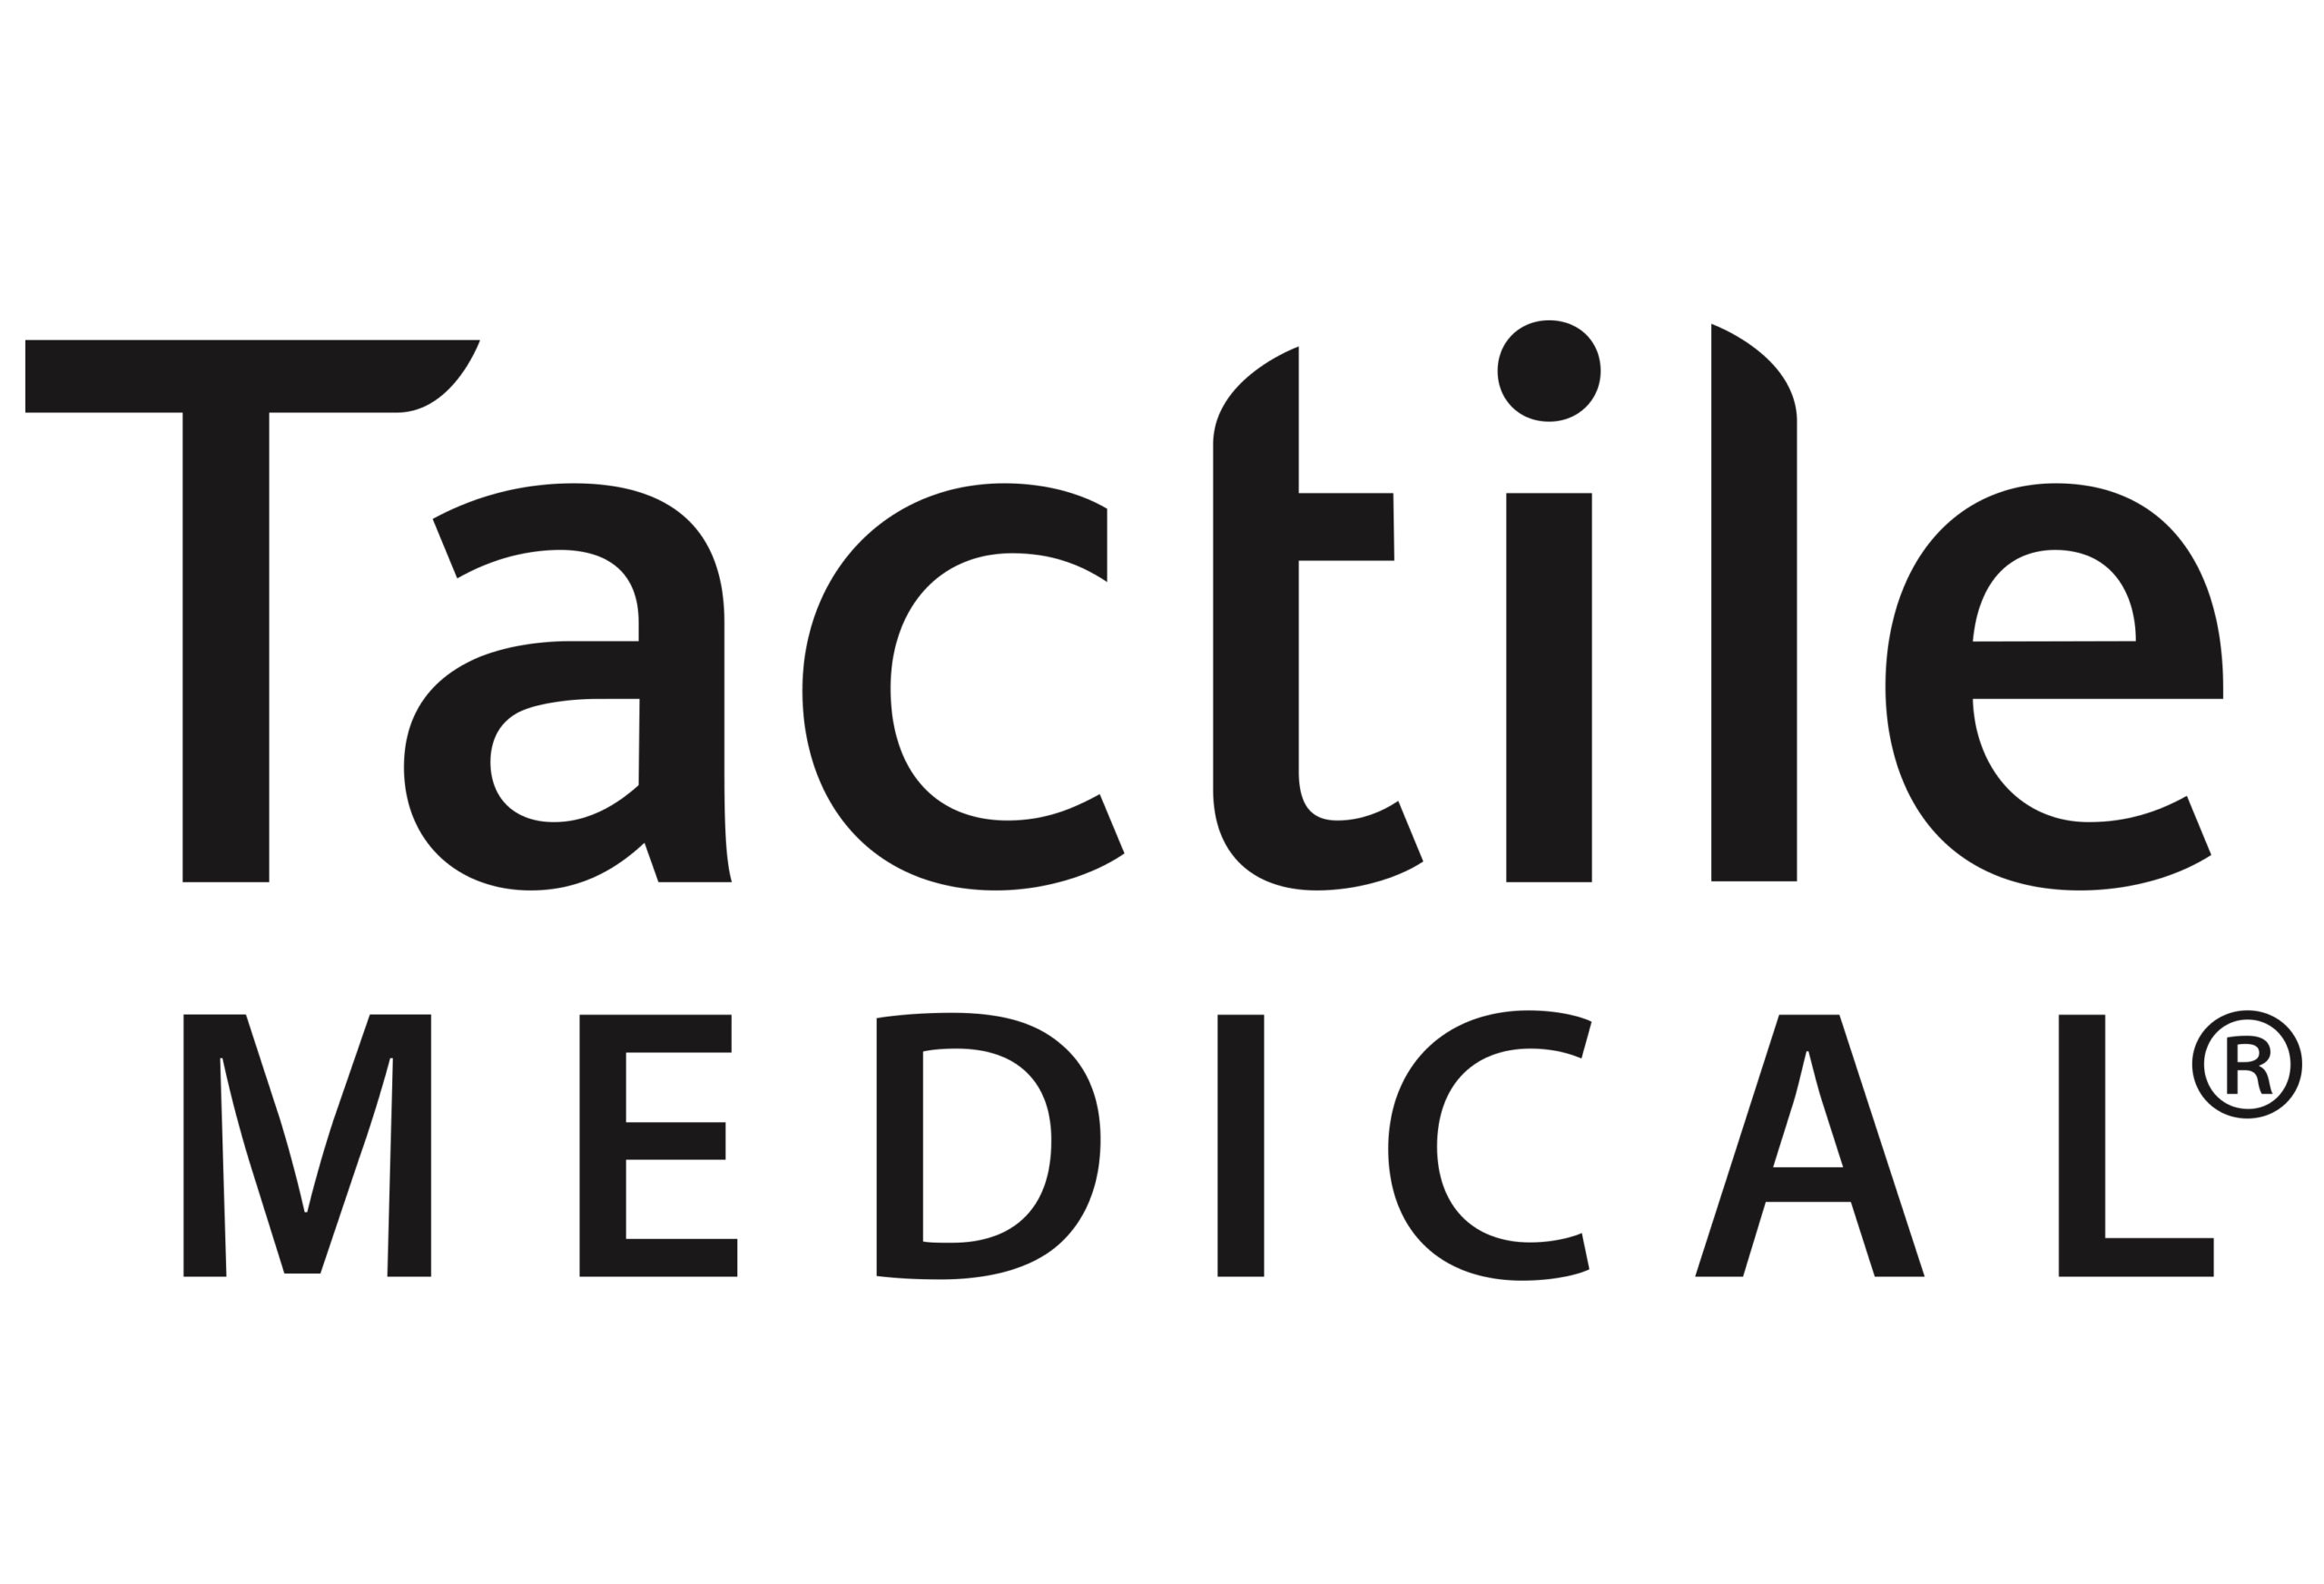 Tactile Medical Logo